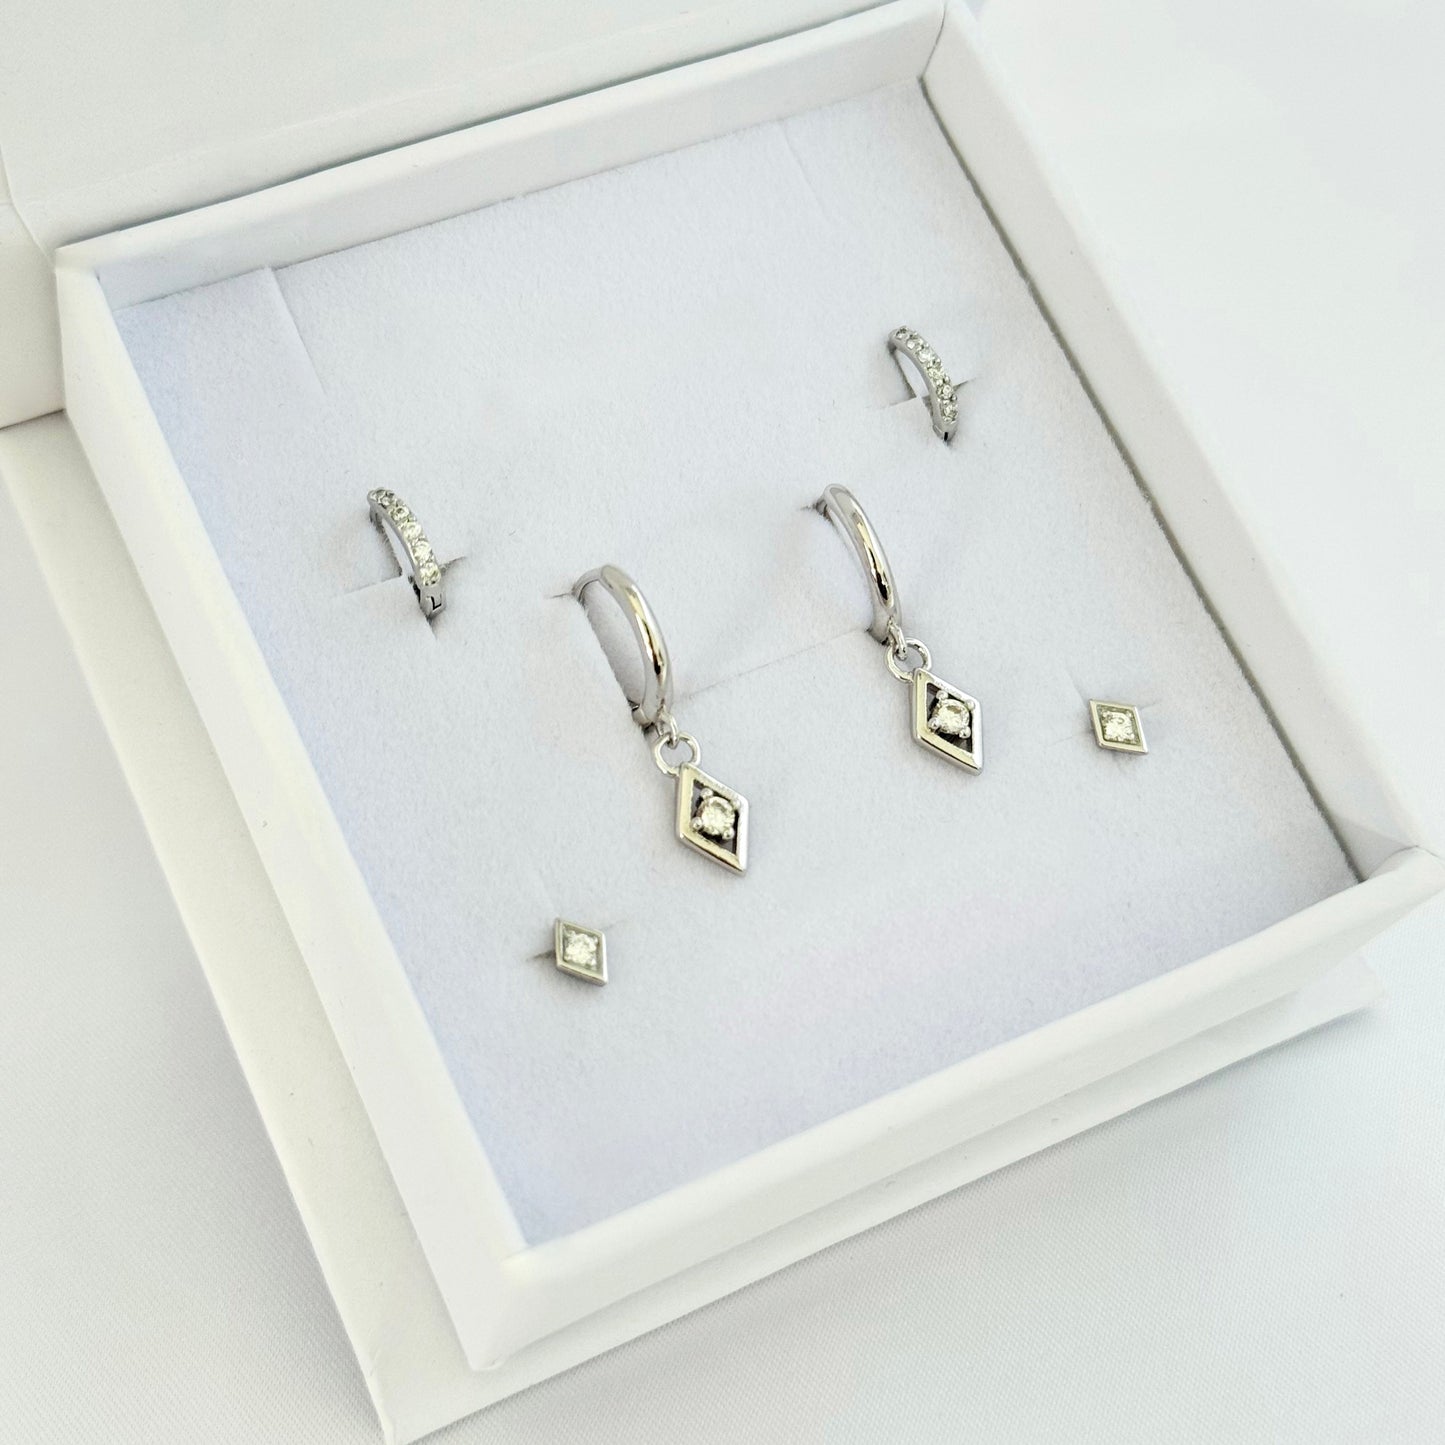 Rhombus Dangle Earrings SILVER 3 Pair Gift Box Set